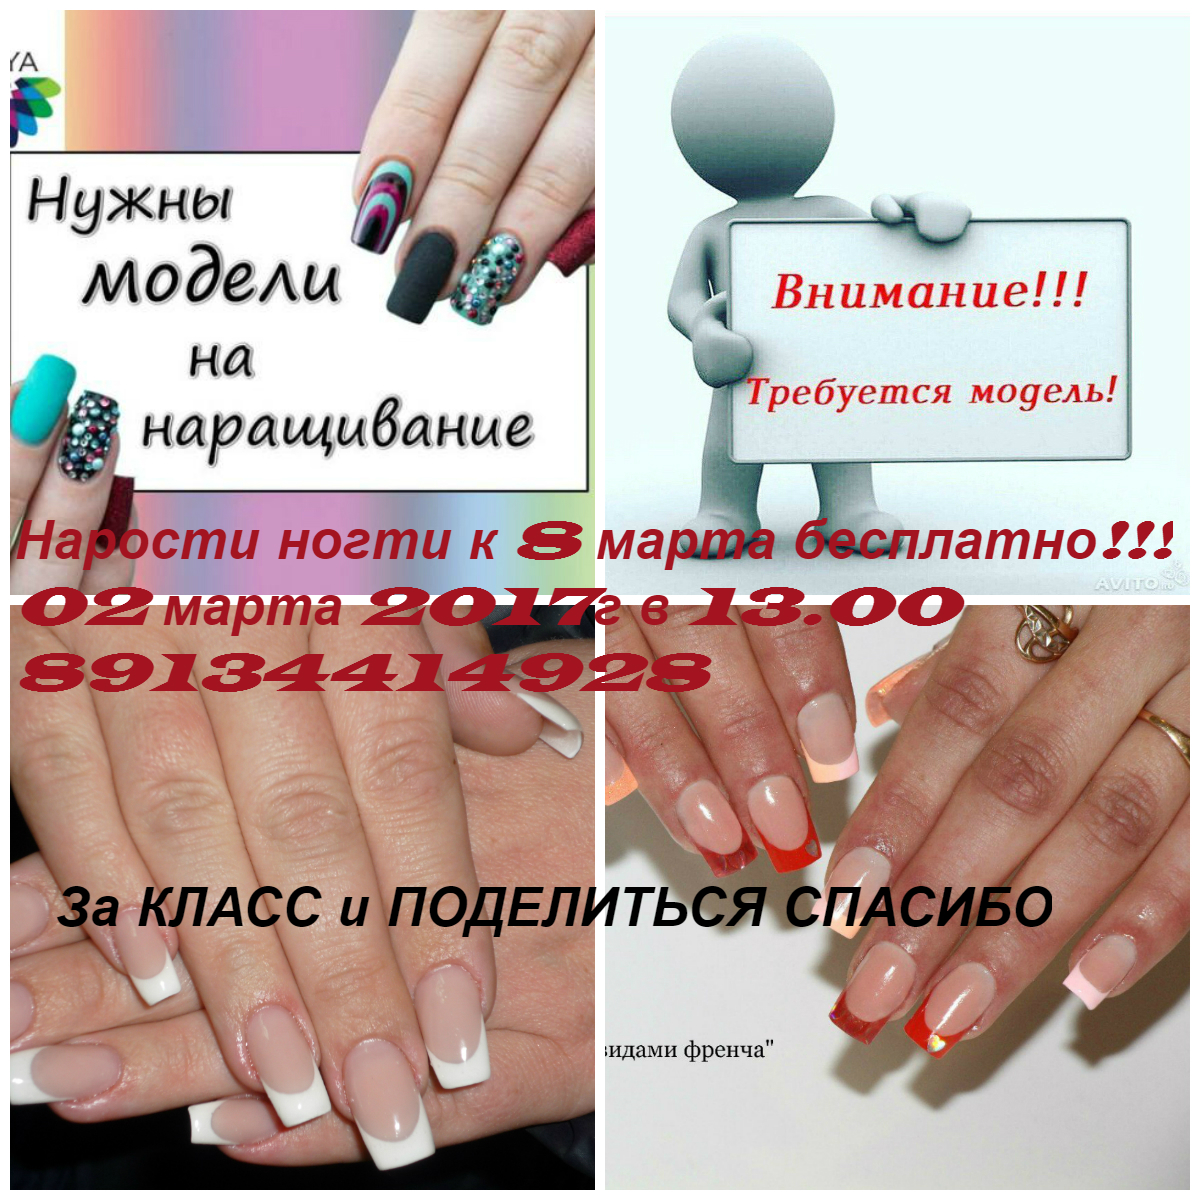 Саяногорск Инфо - collage1.jpg, Скачано: 136